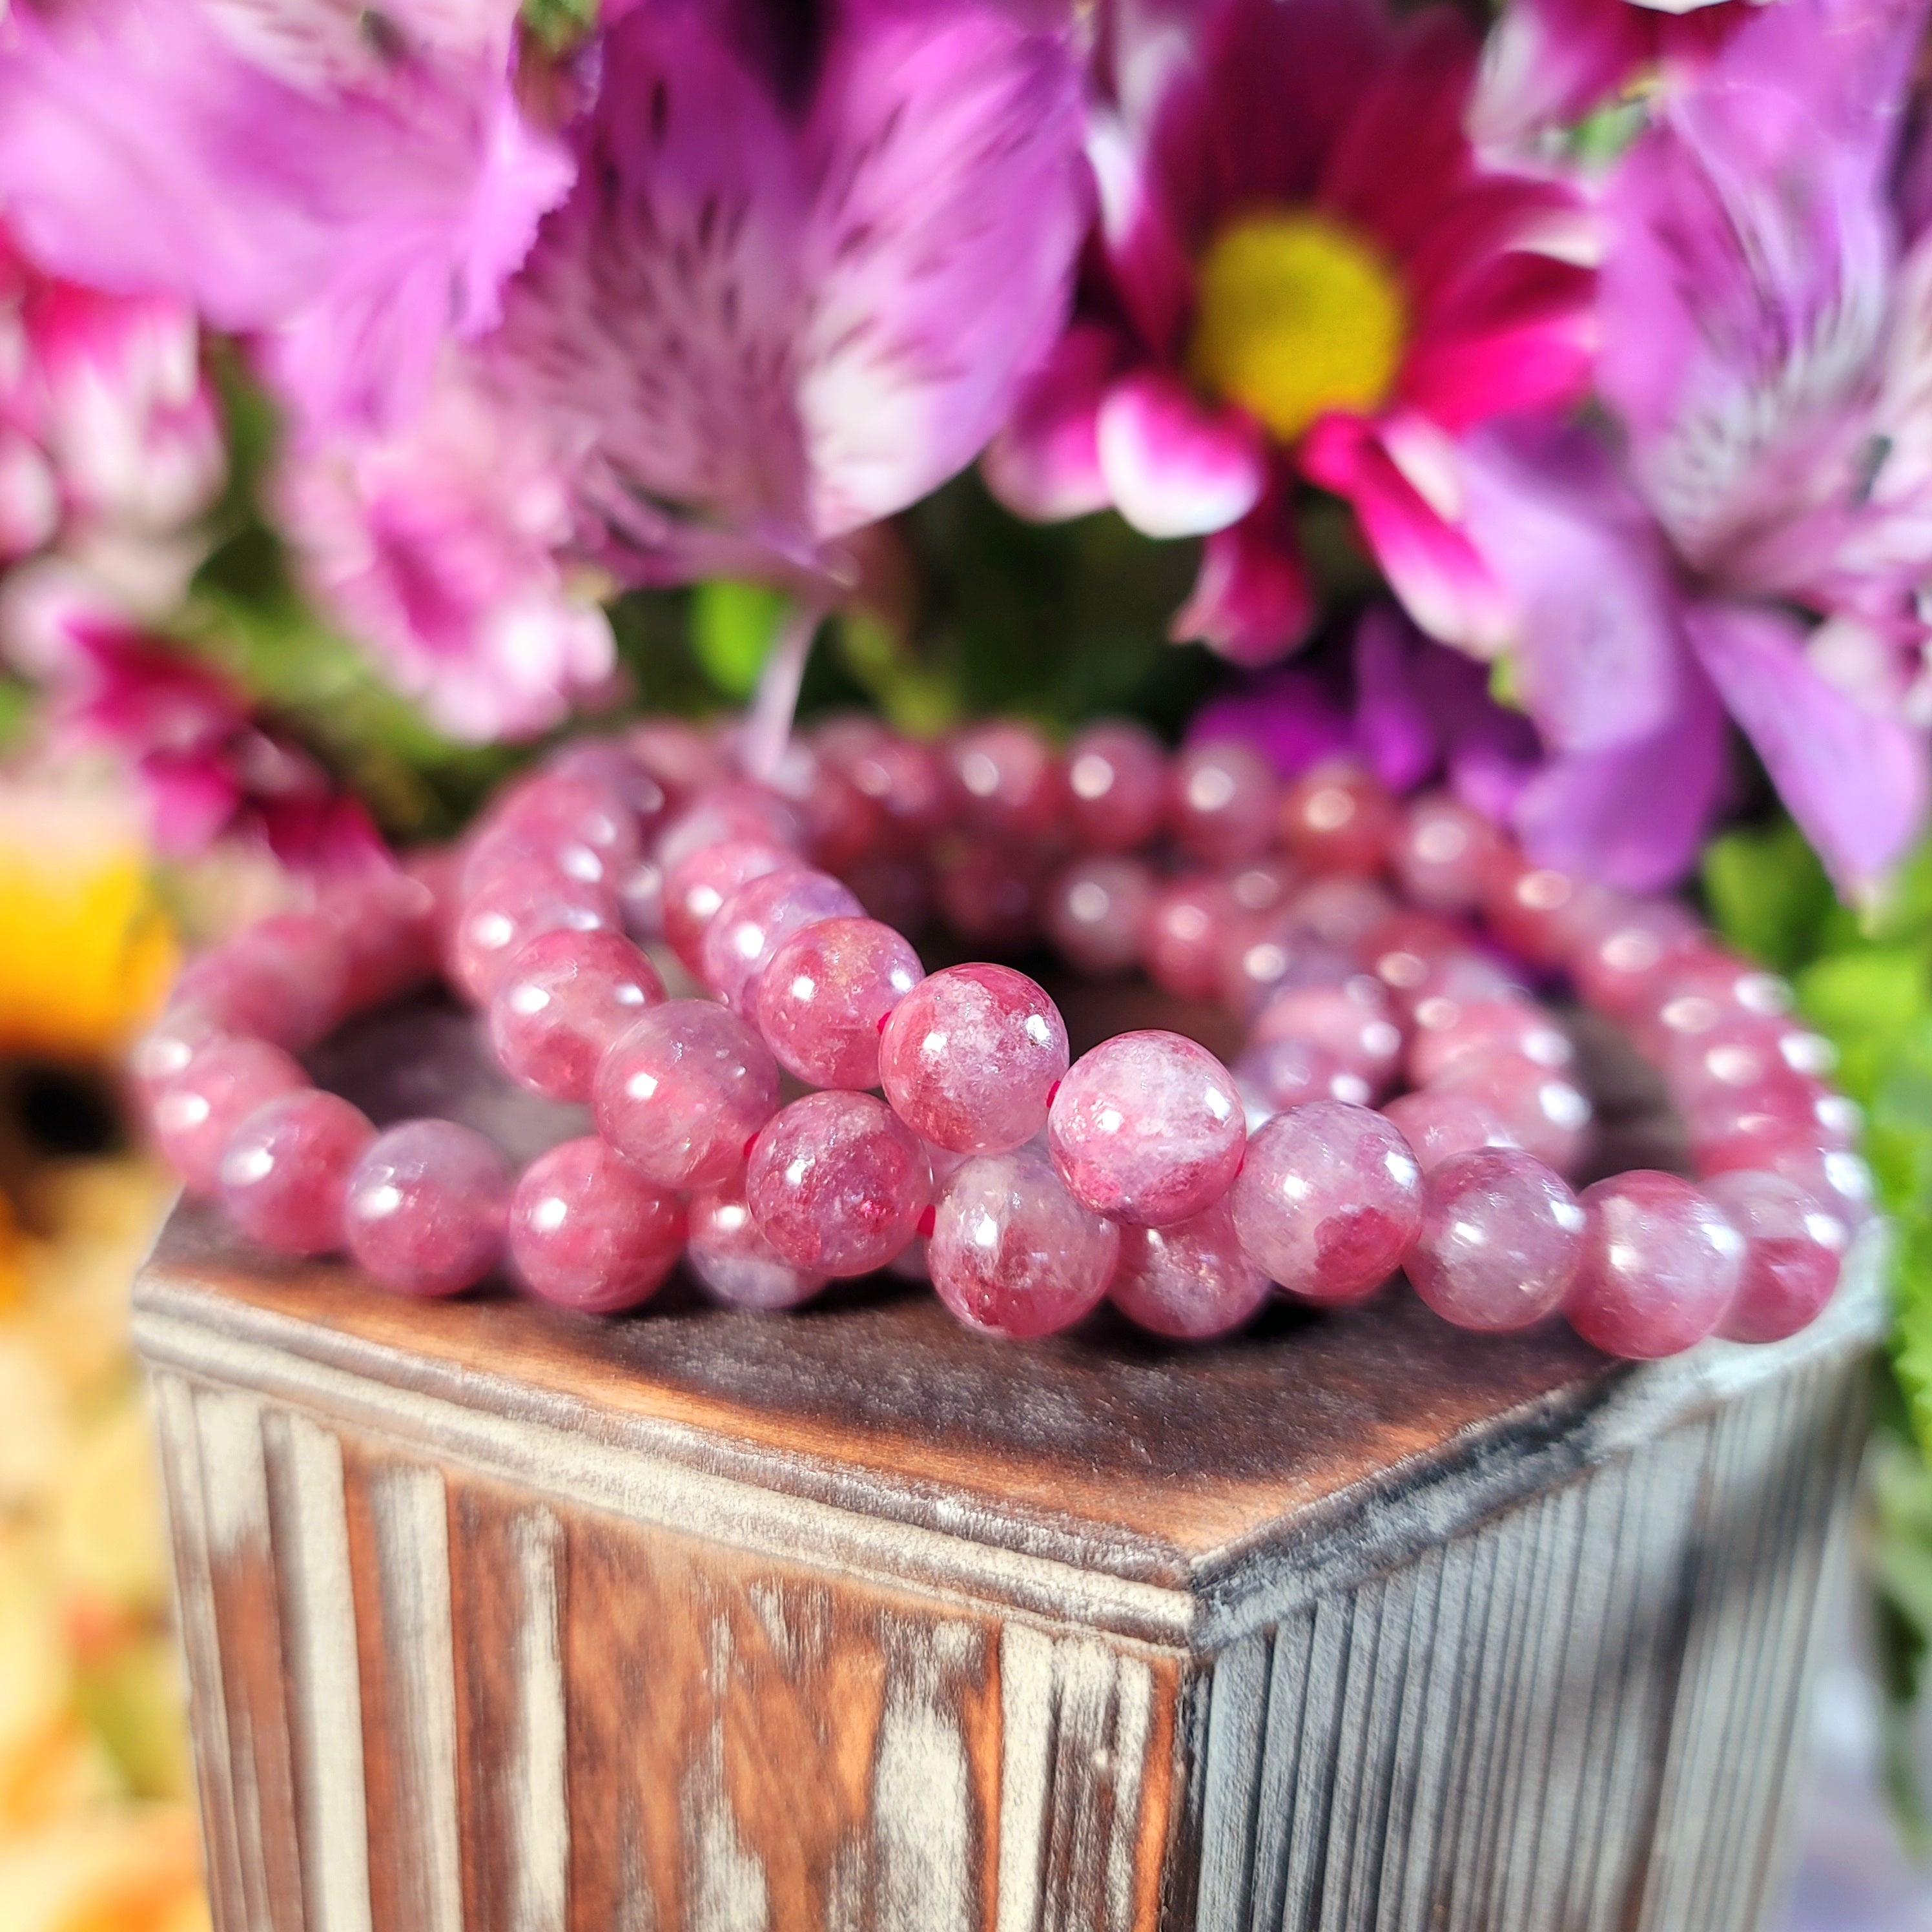 Pink Tourmaline & Lepidolite Bracelet (AAA Grade) for Emotional Healing, Joy and Stress Relief